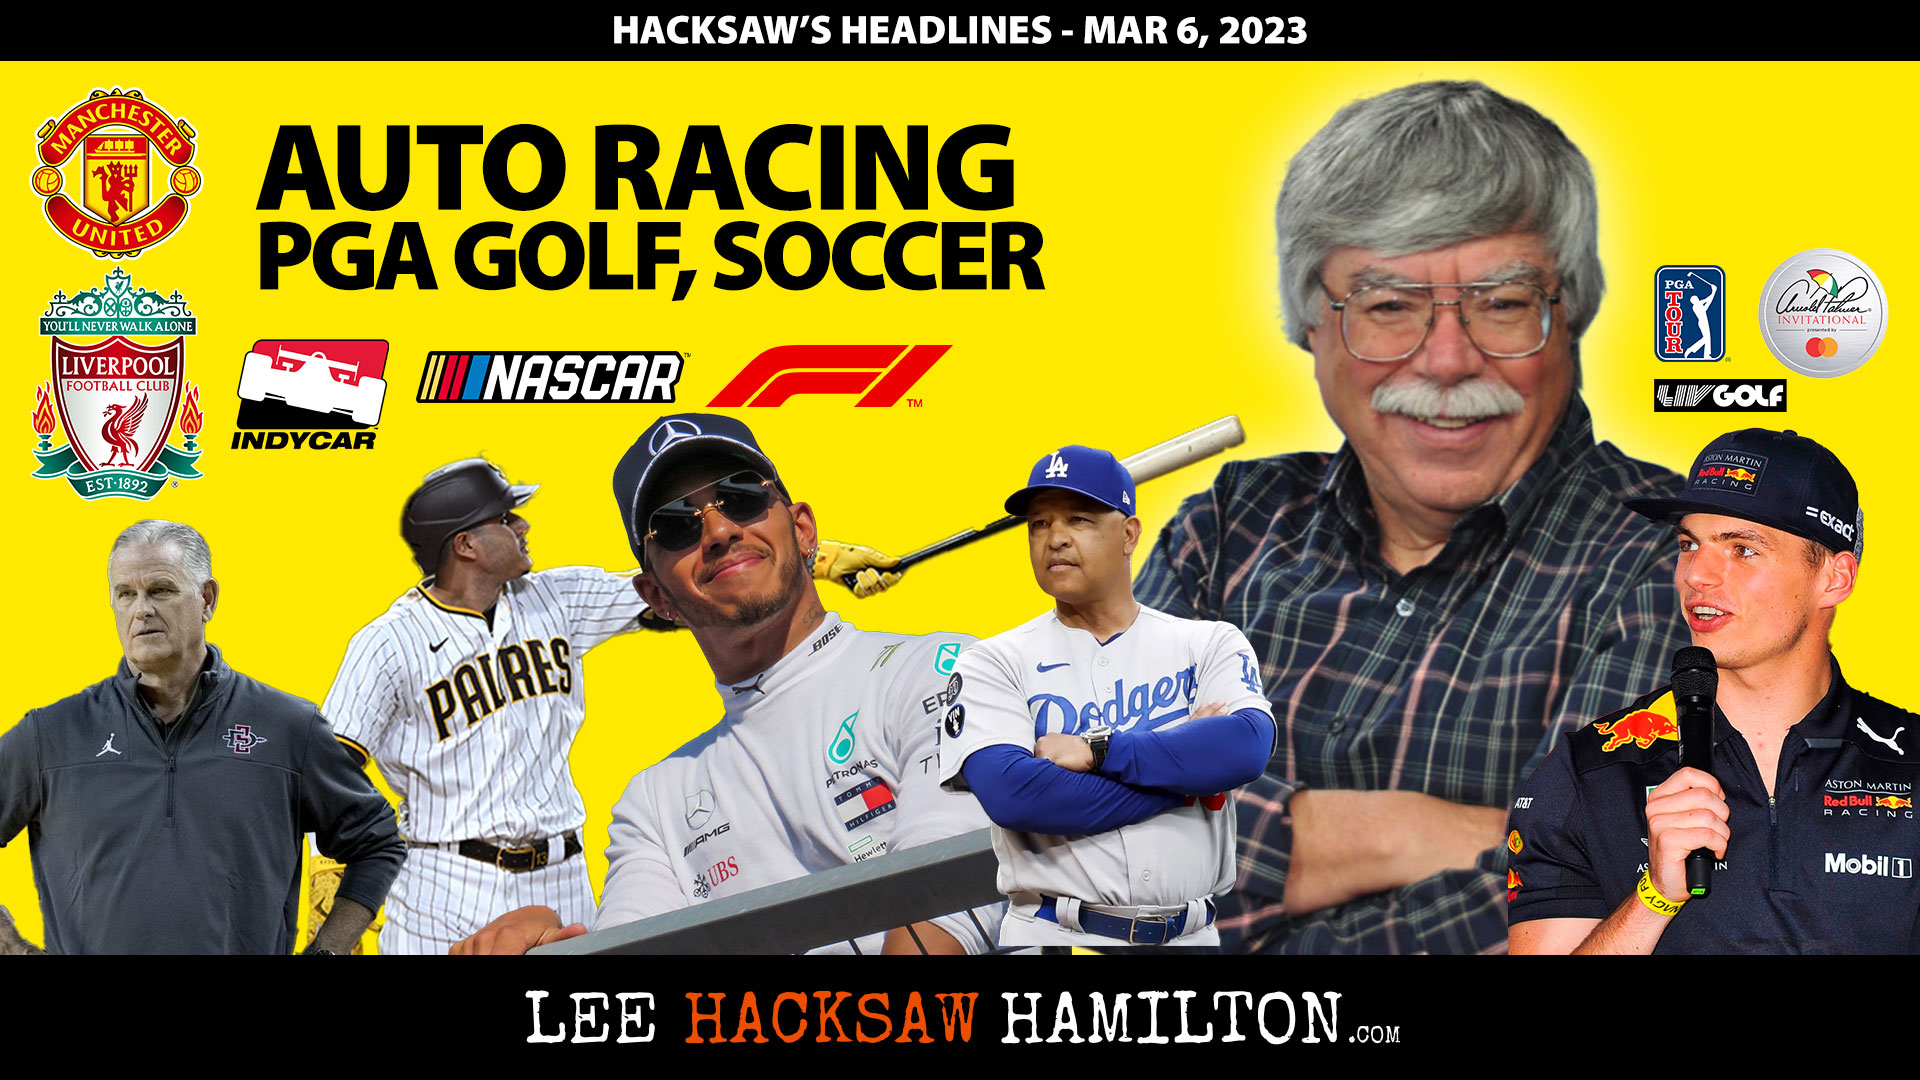 Lee Hacksaw Hamilton discusses PGA Palmer Invitational, Manchester United, Liverpool, IndyCar, F1, Bahrain Grand Prix, NASCAR